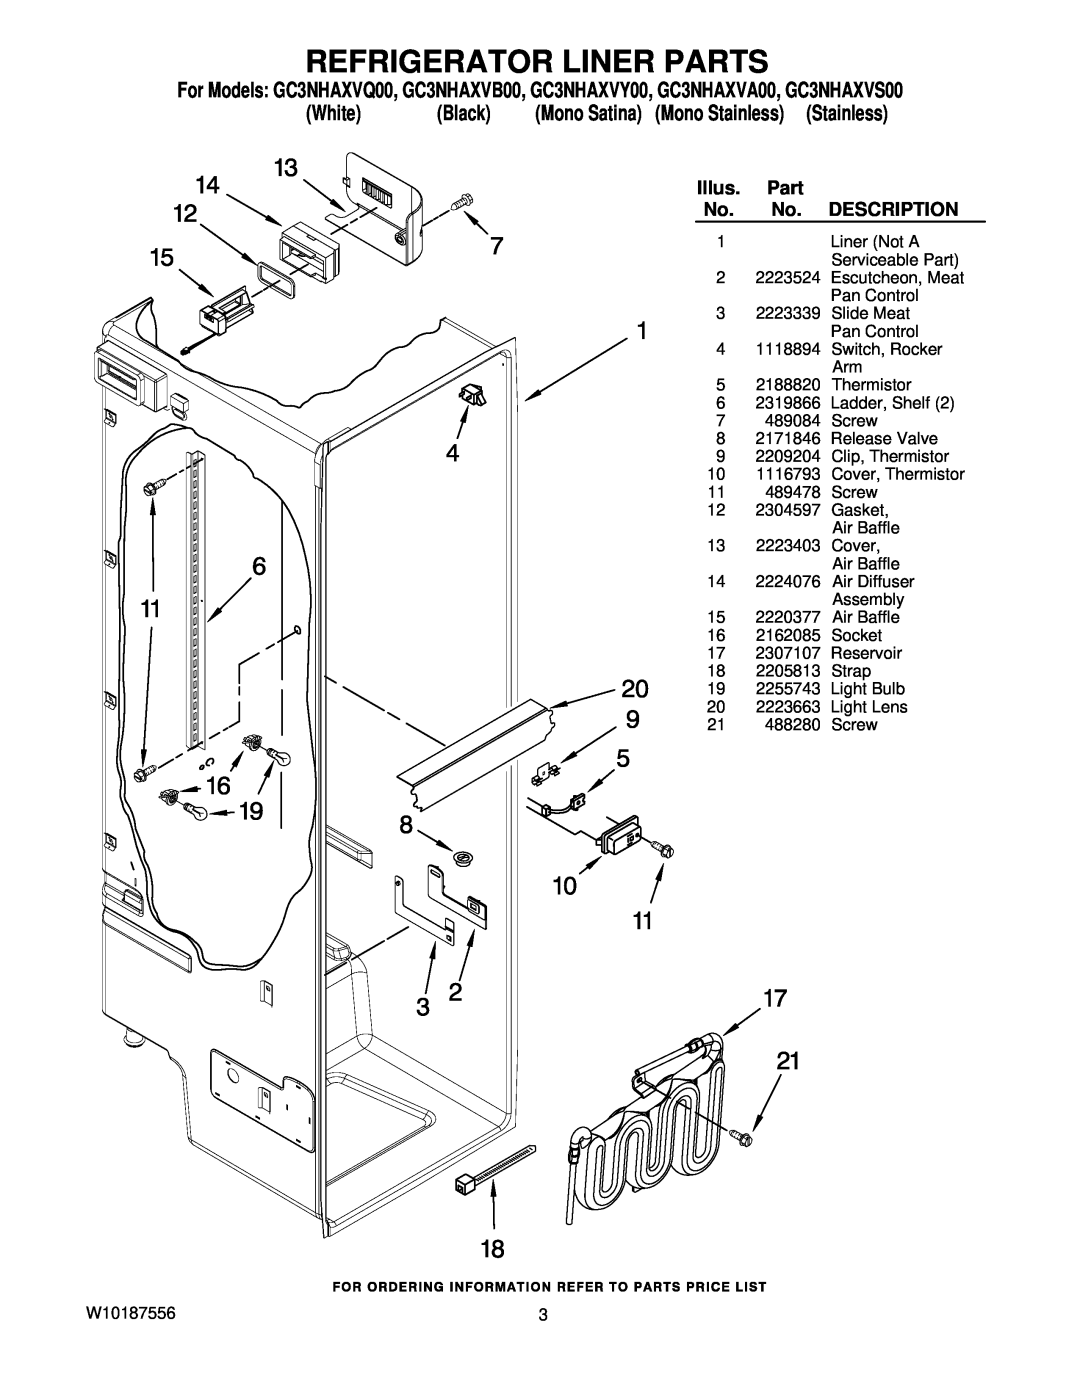 Whirlpool GC3NHAXVS00 Refrigerator Liner Parts, Mono Satina Mono Stainless Stainless, Illus, Description, White, Black 